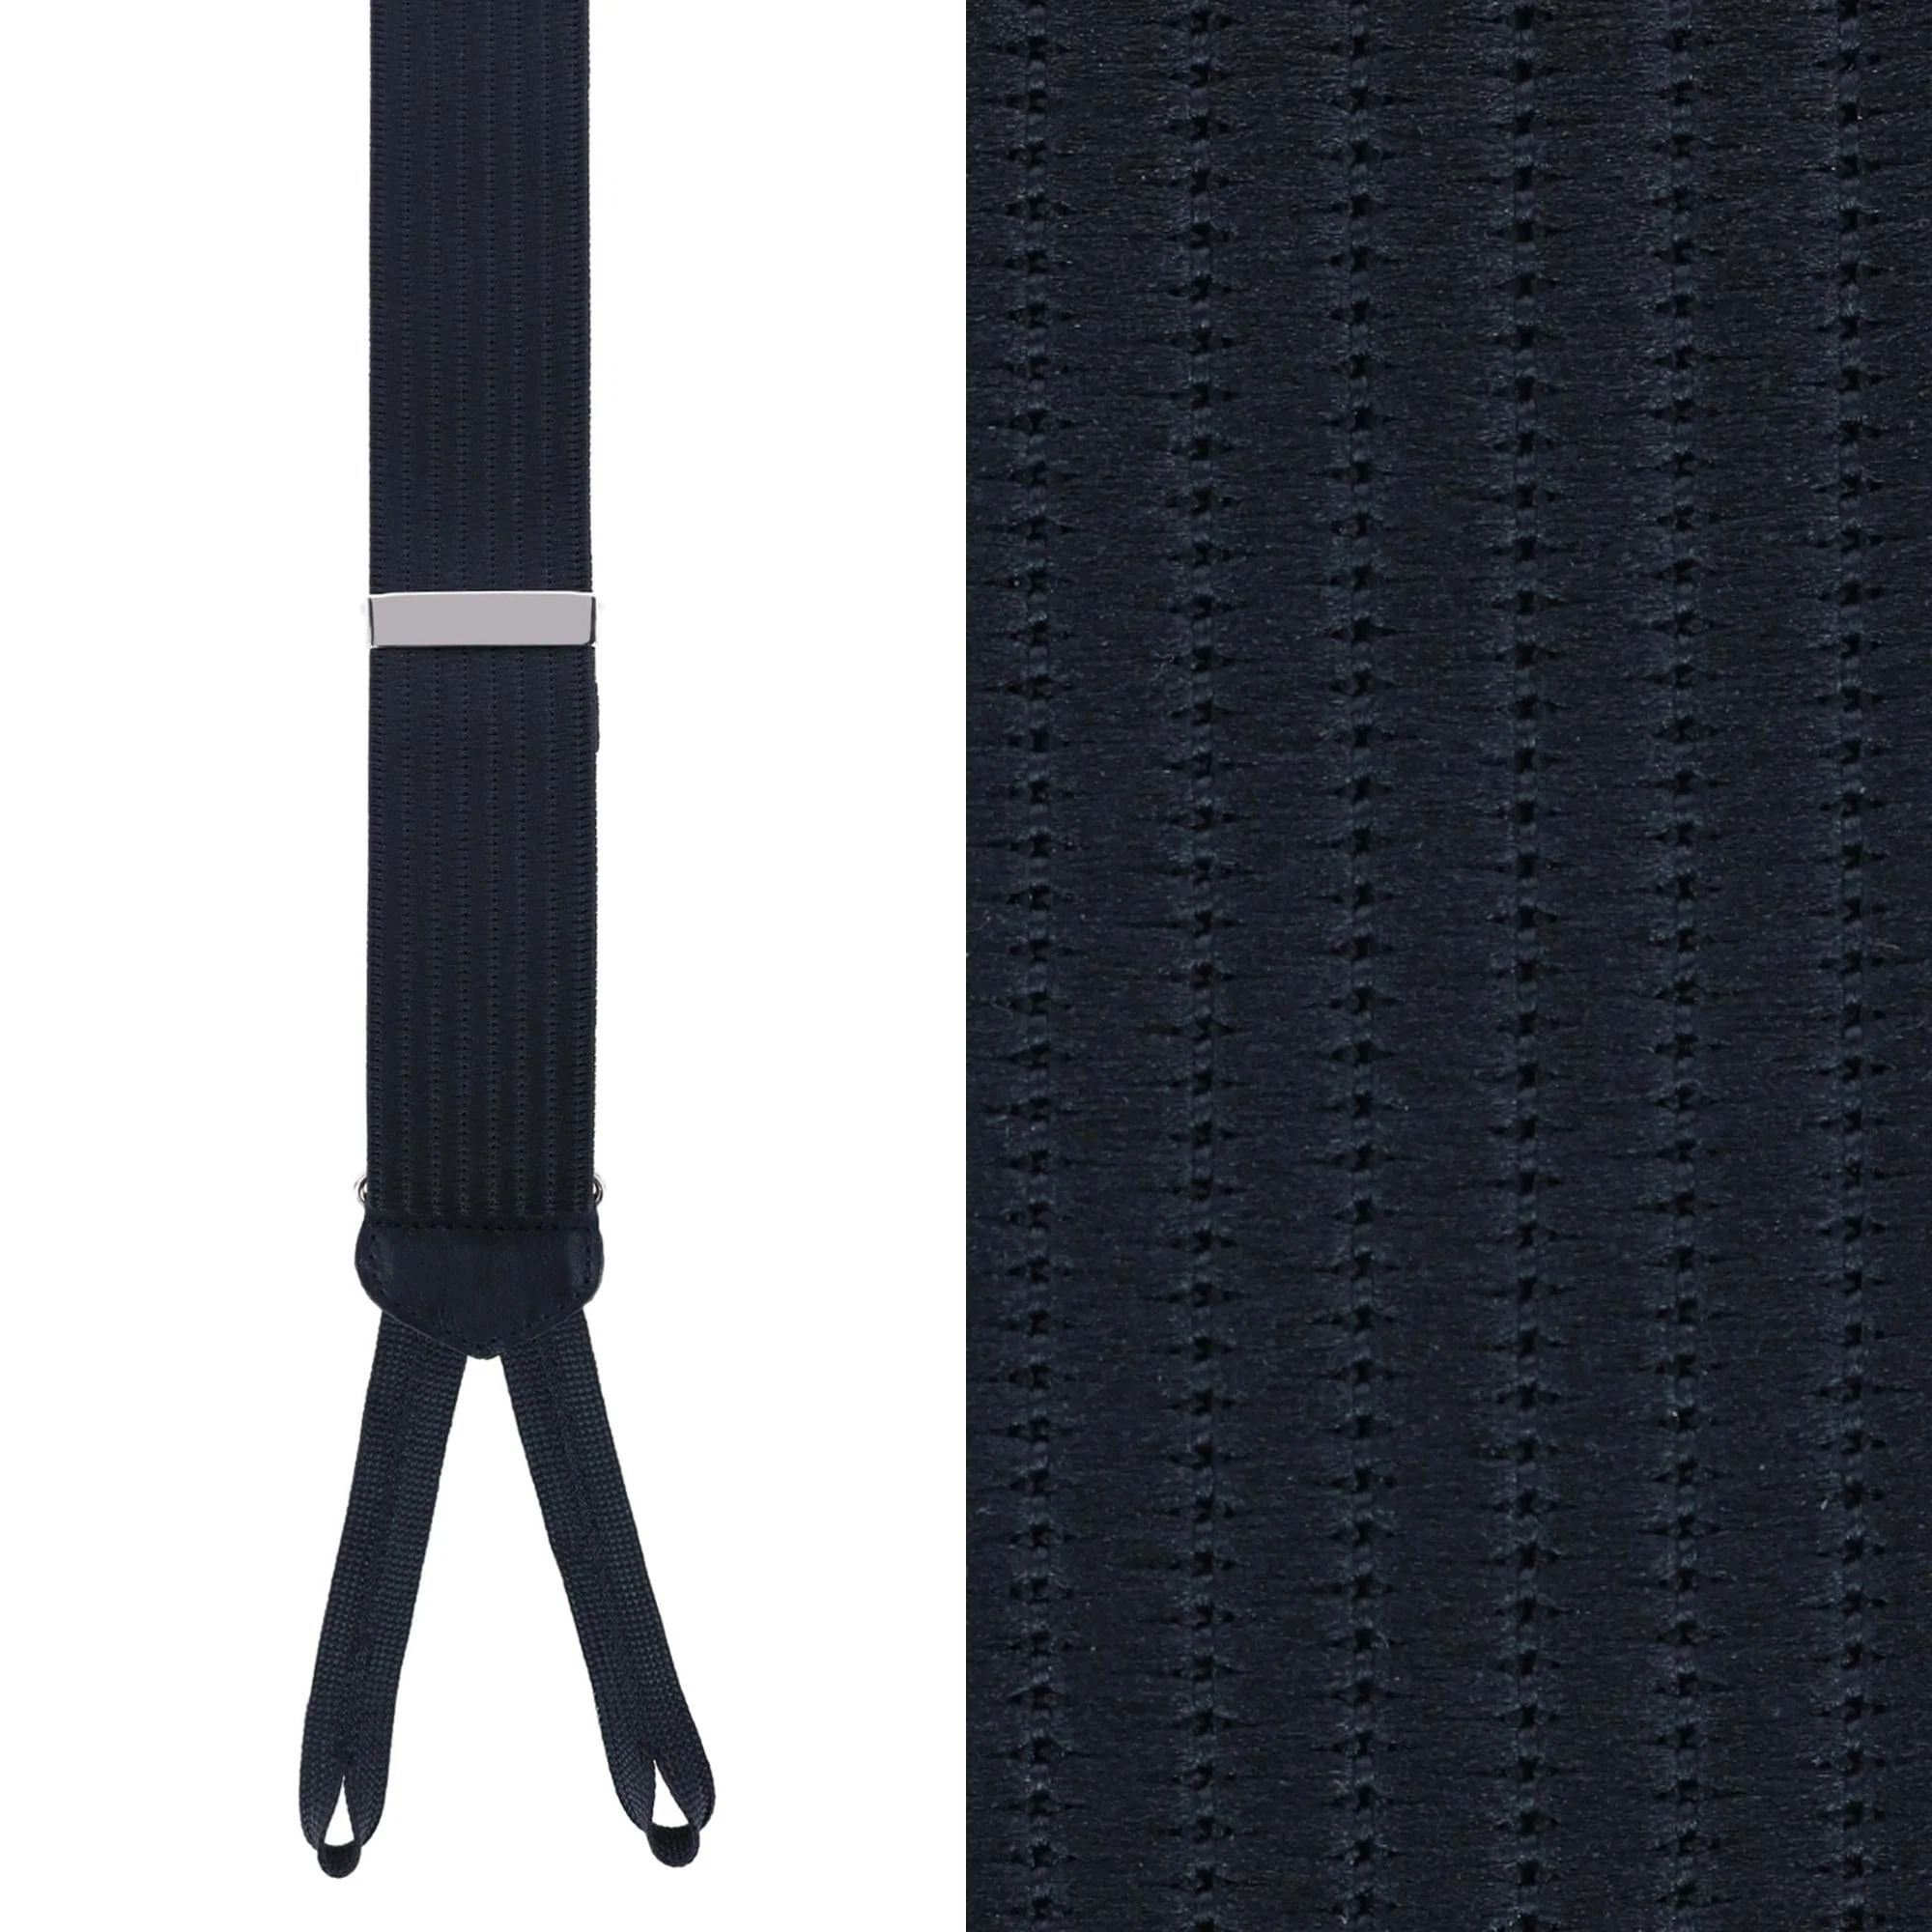 Regal Formal Black Stretch Suspenders